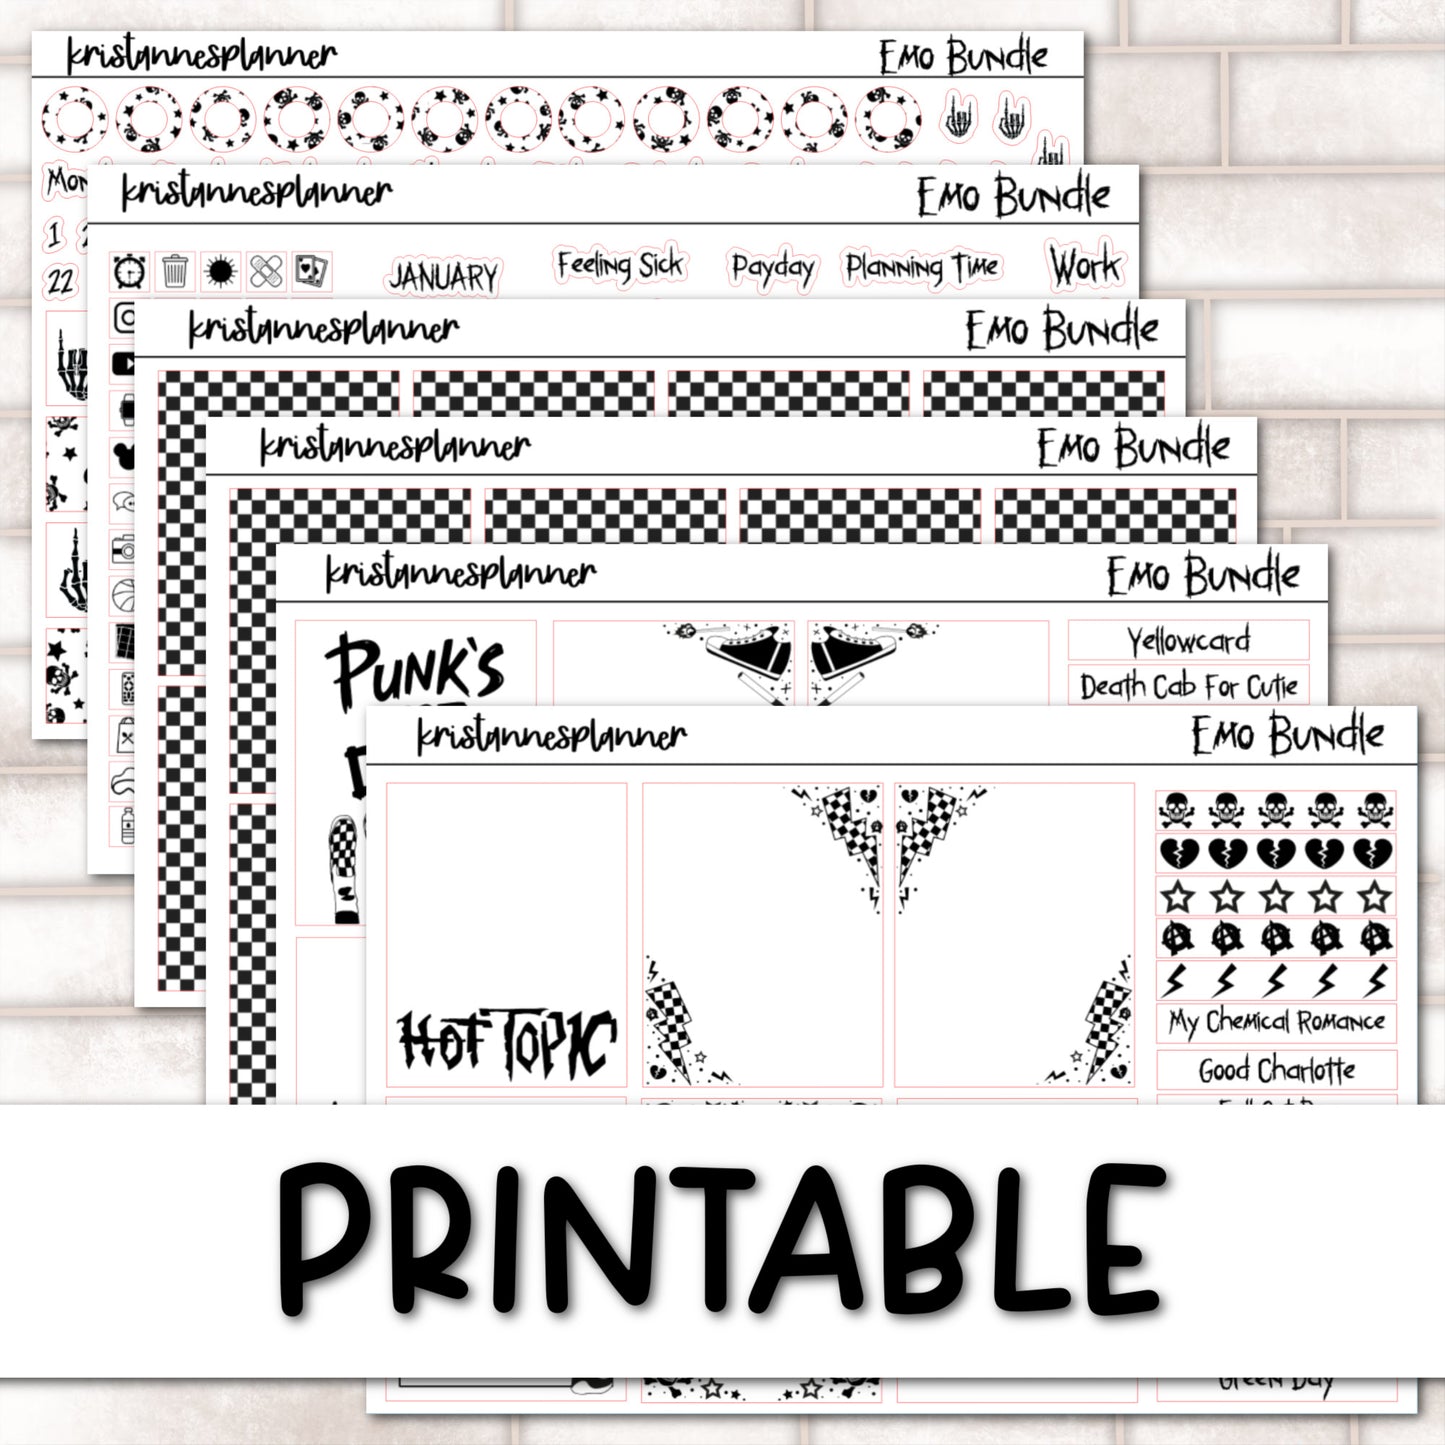 Emo Foil Bundle - Printable